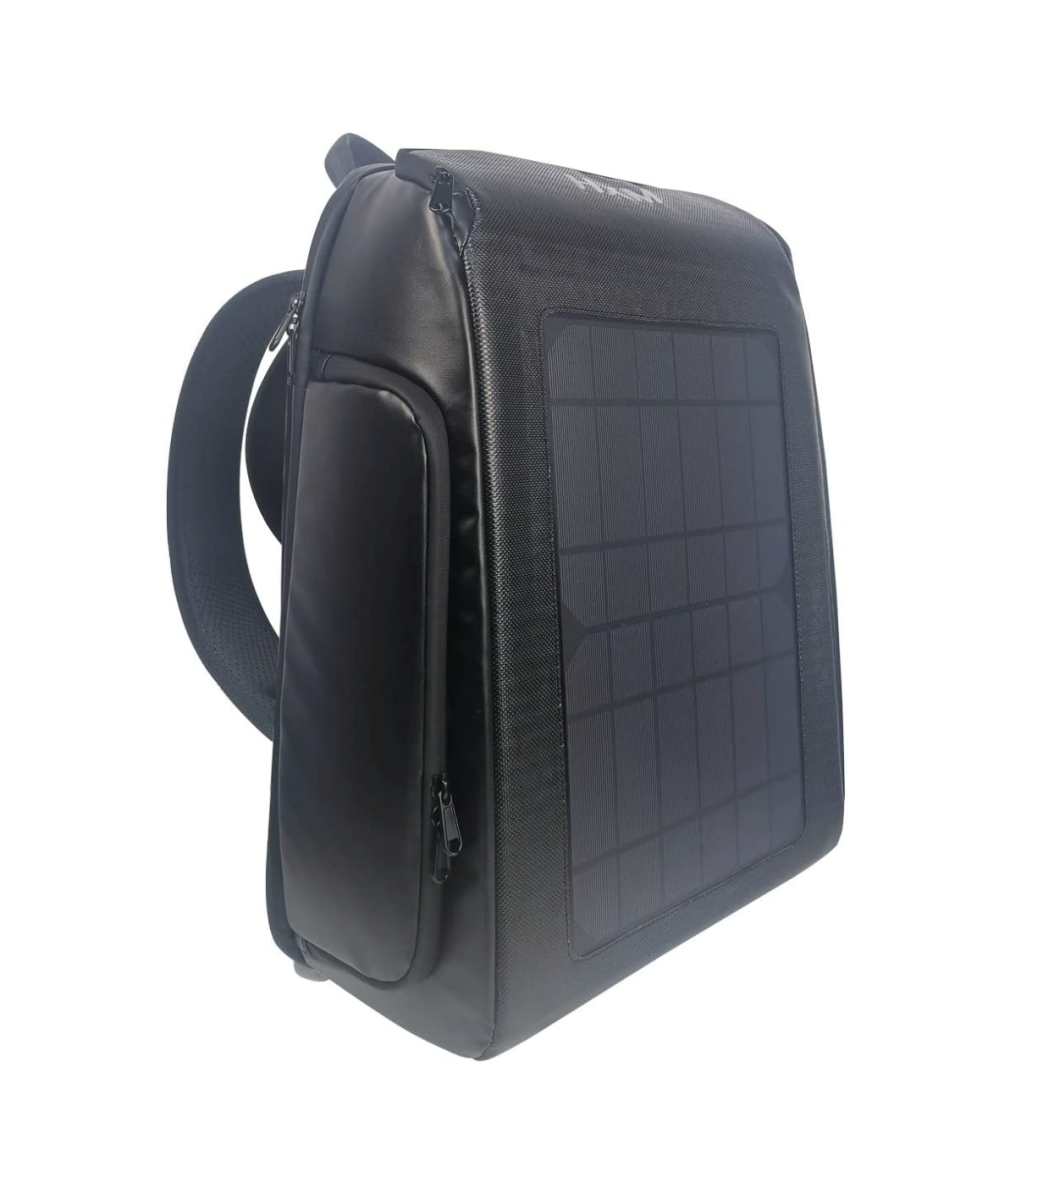 A black SGUESIKR 12W Solar Backpack